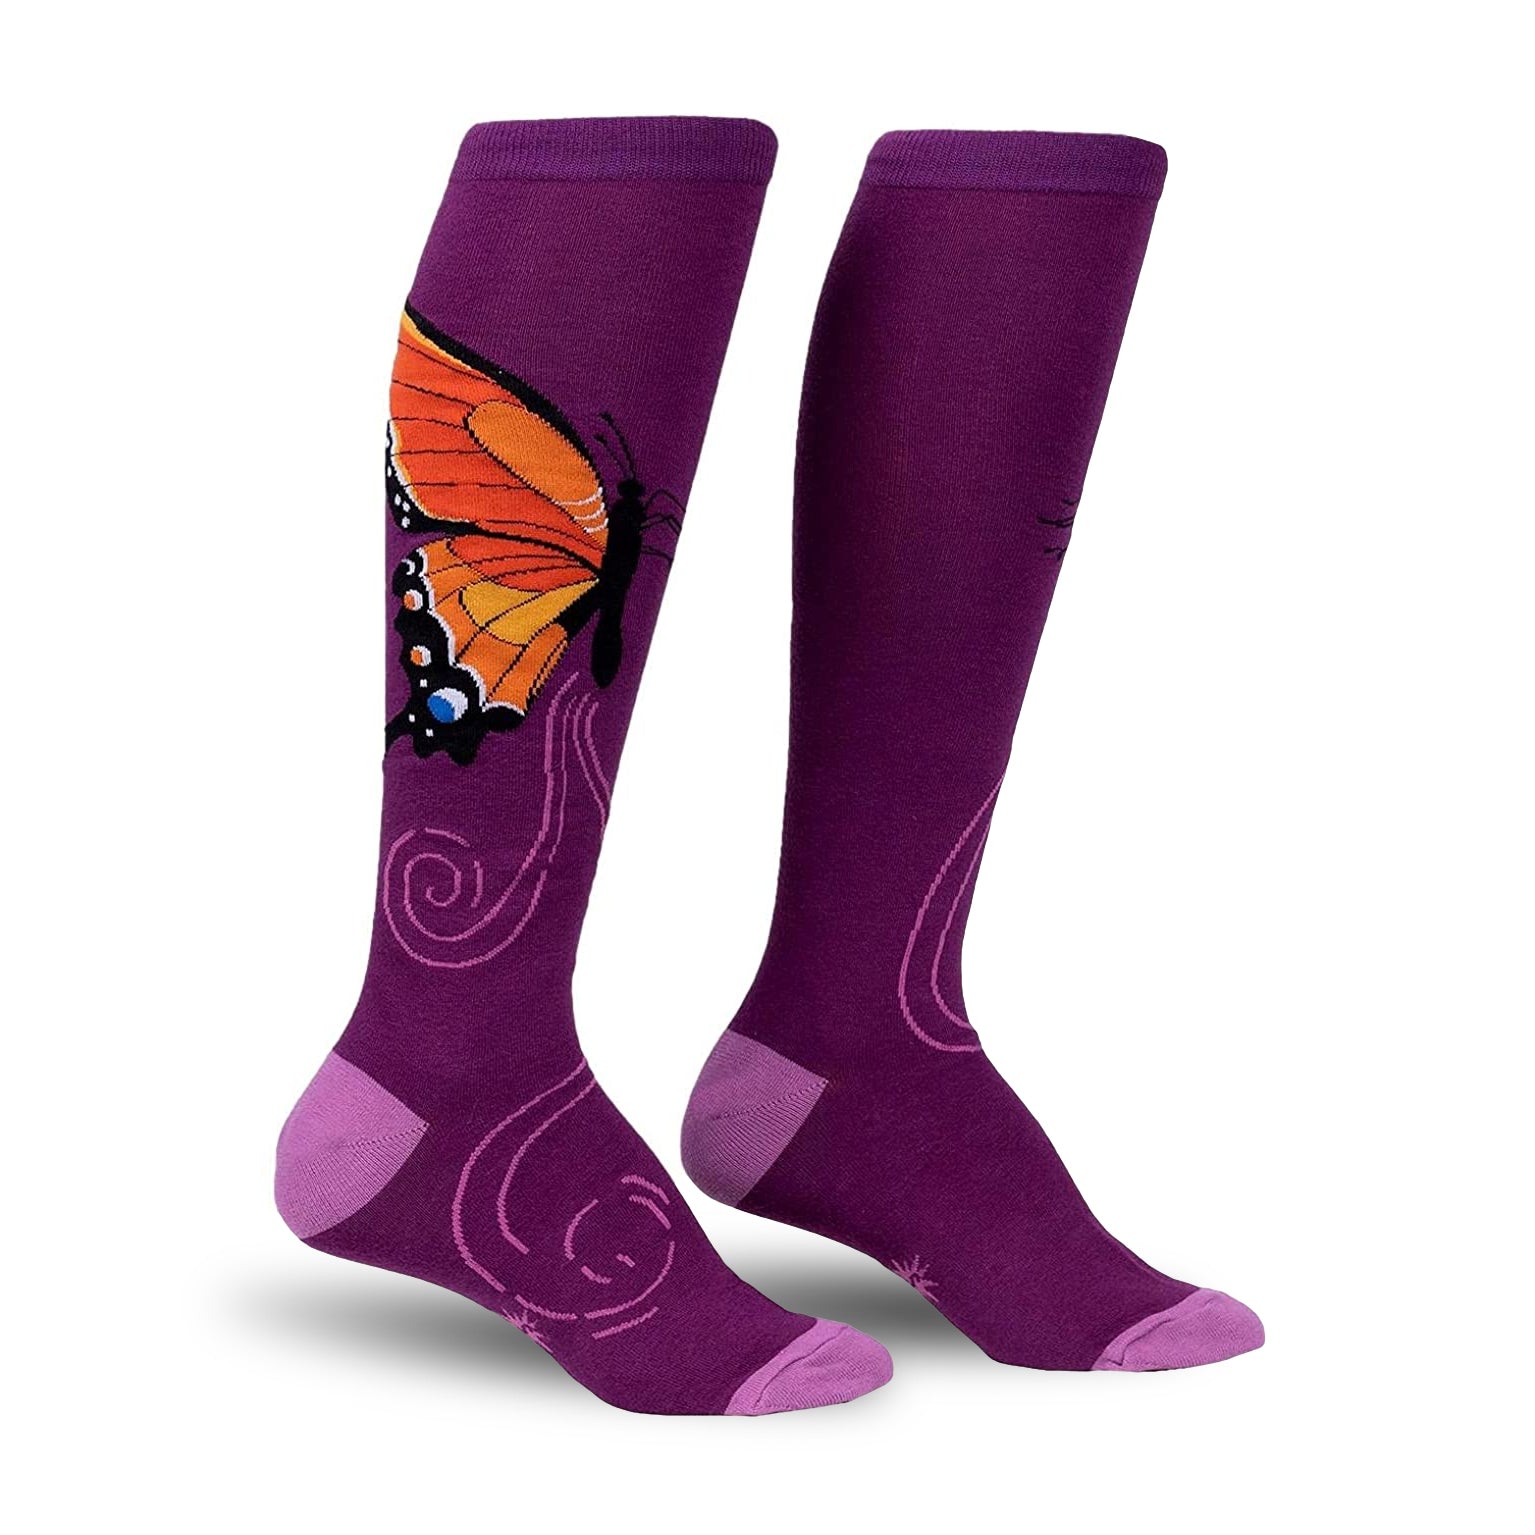 The Monarch Knee High Socks